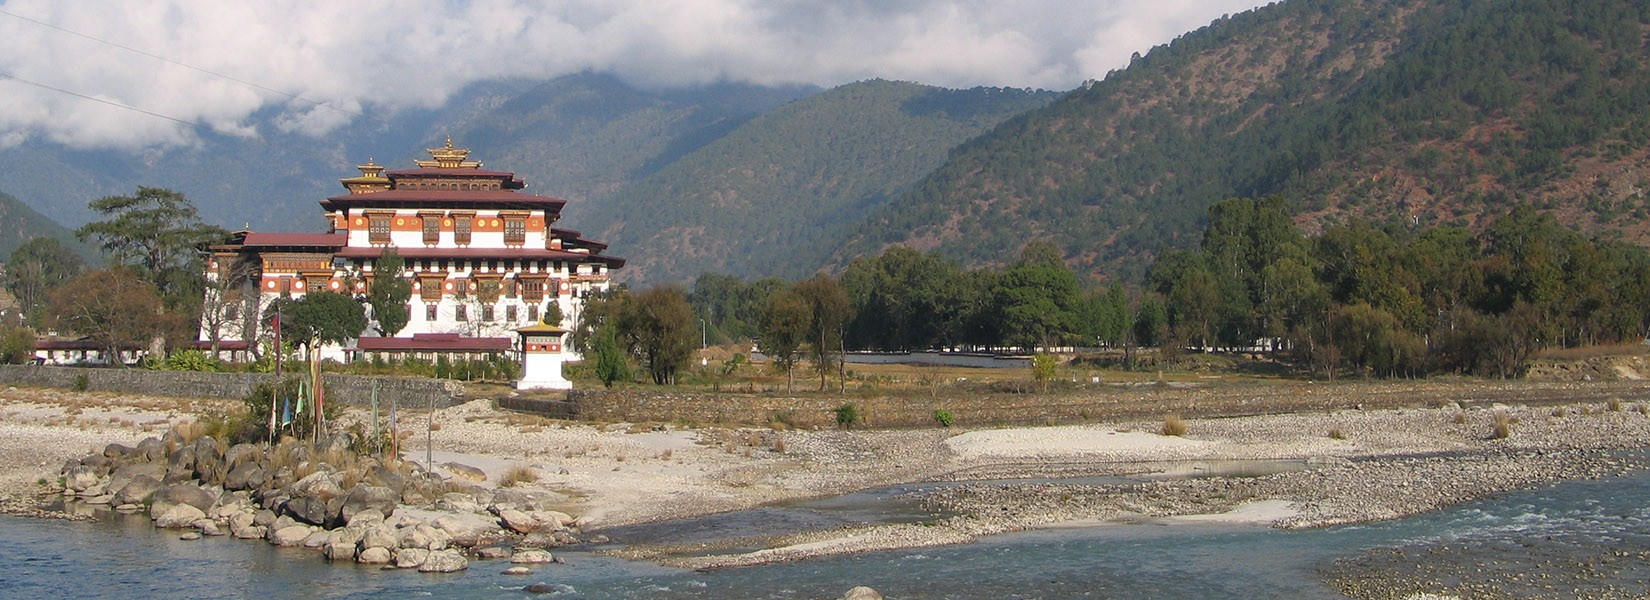 Bhutan-thimpu-dzong